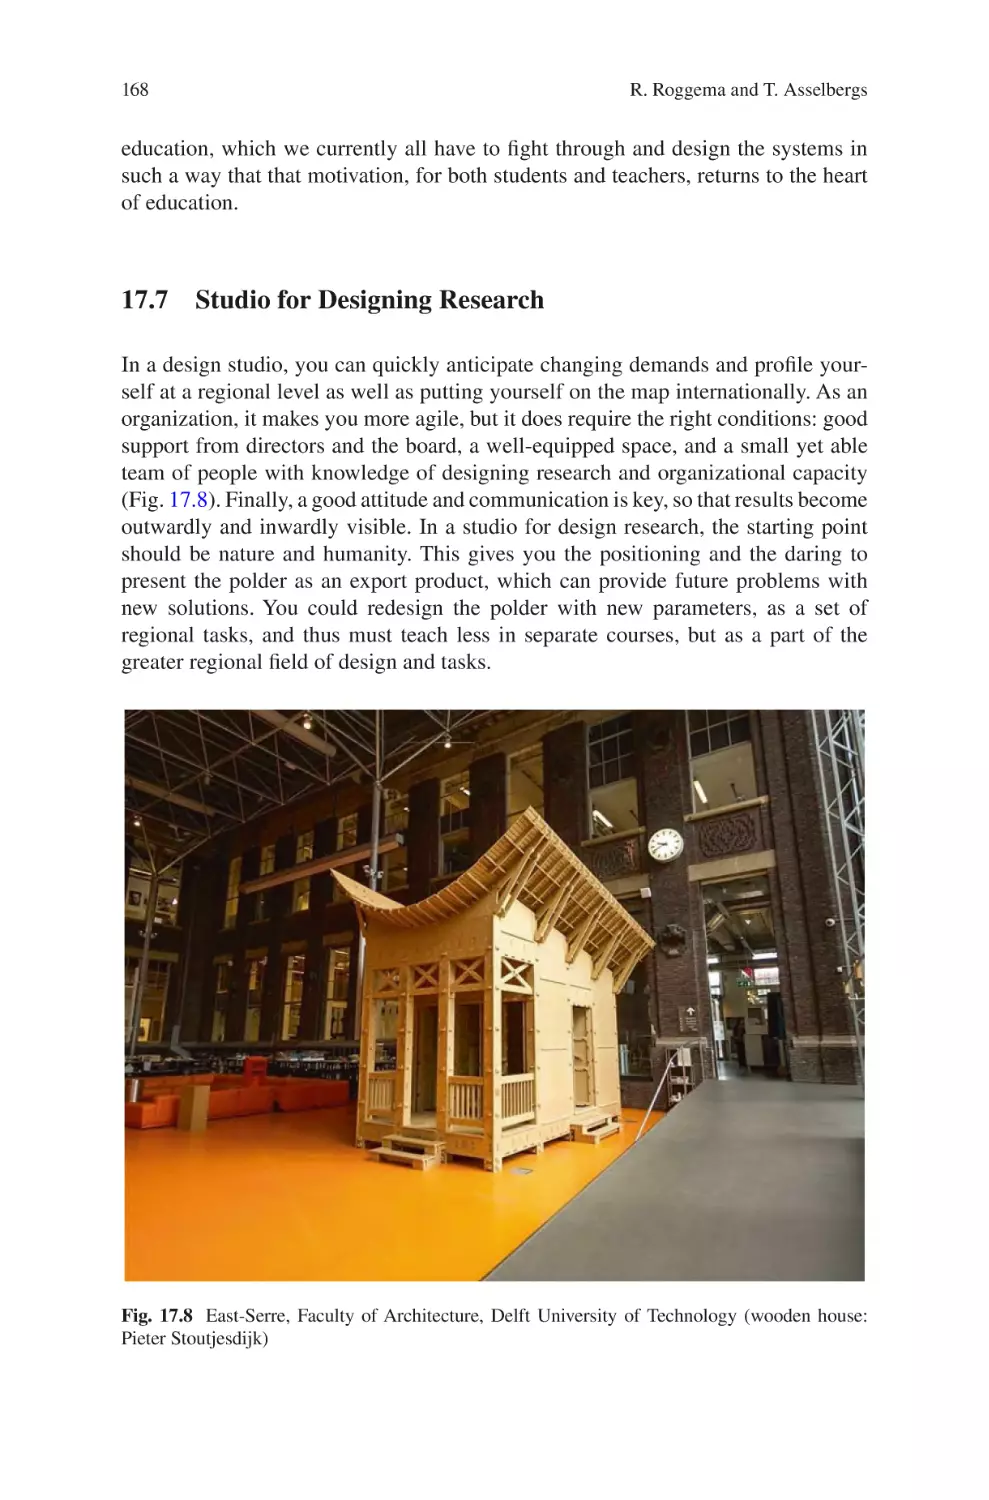 17.7 Studio for Designing Research